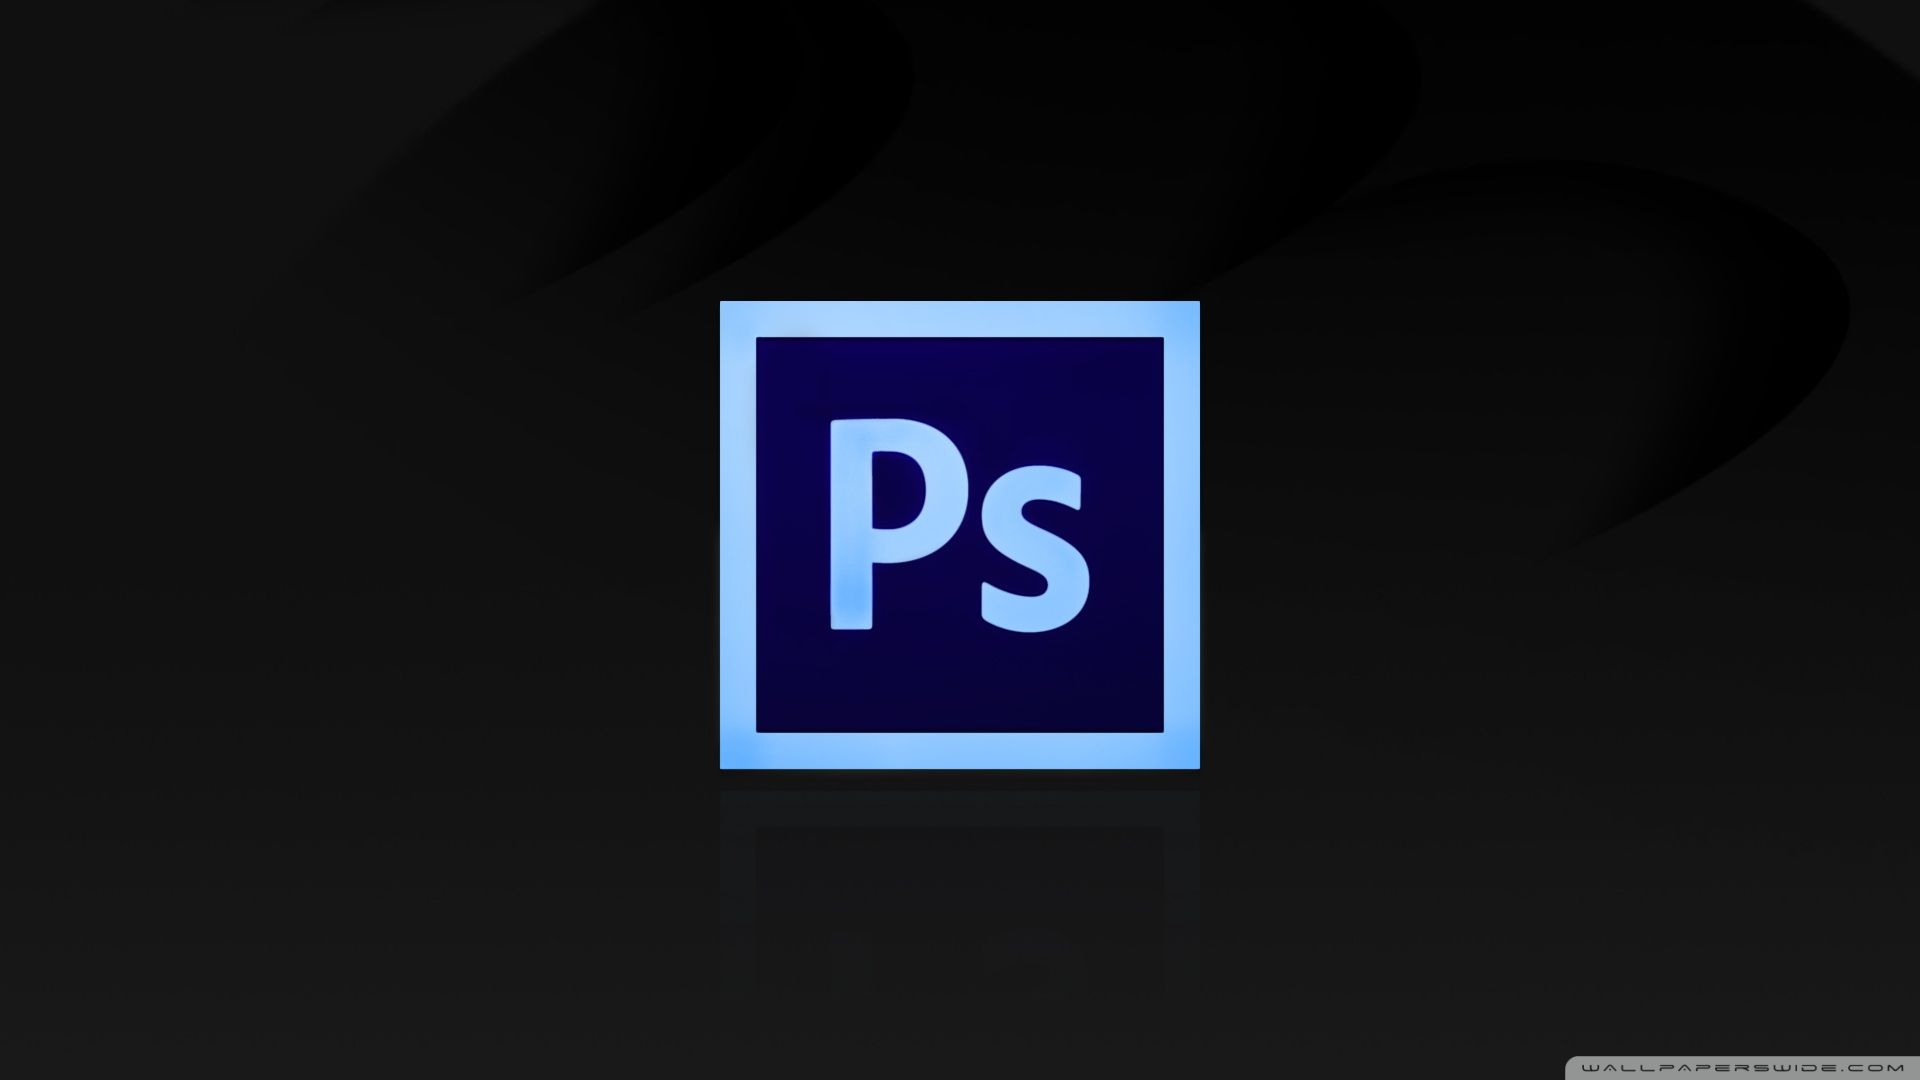 Adobe Photohop CS6 Ultra HD Desktop Background Wallpaper for 4K UHD TV, Widescreen & UltraWide Desktop & Laptop, Tablet